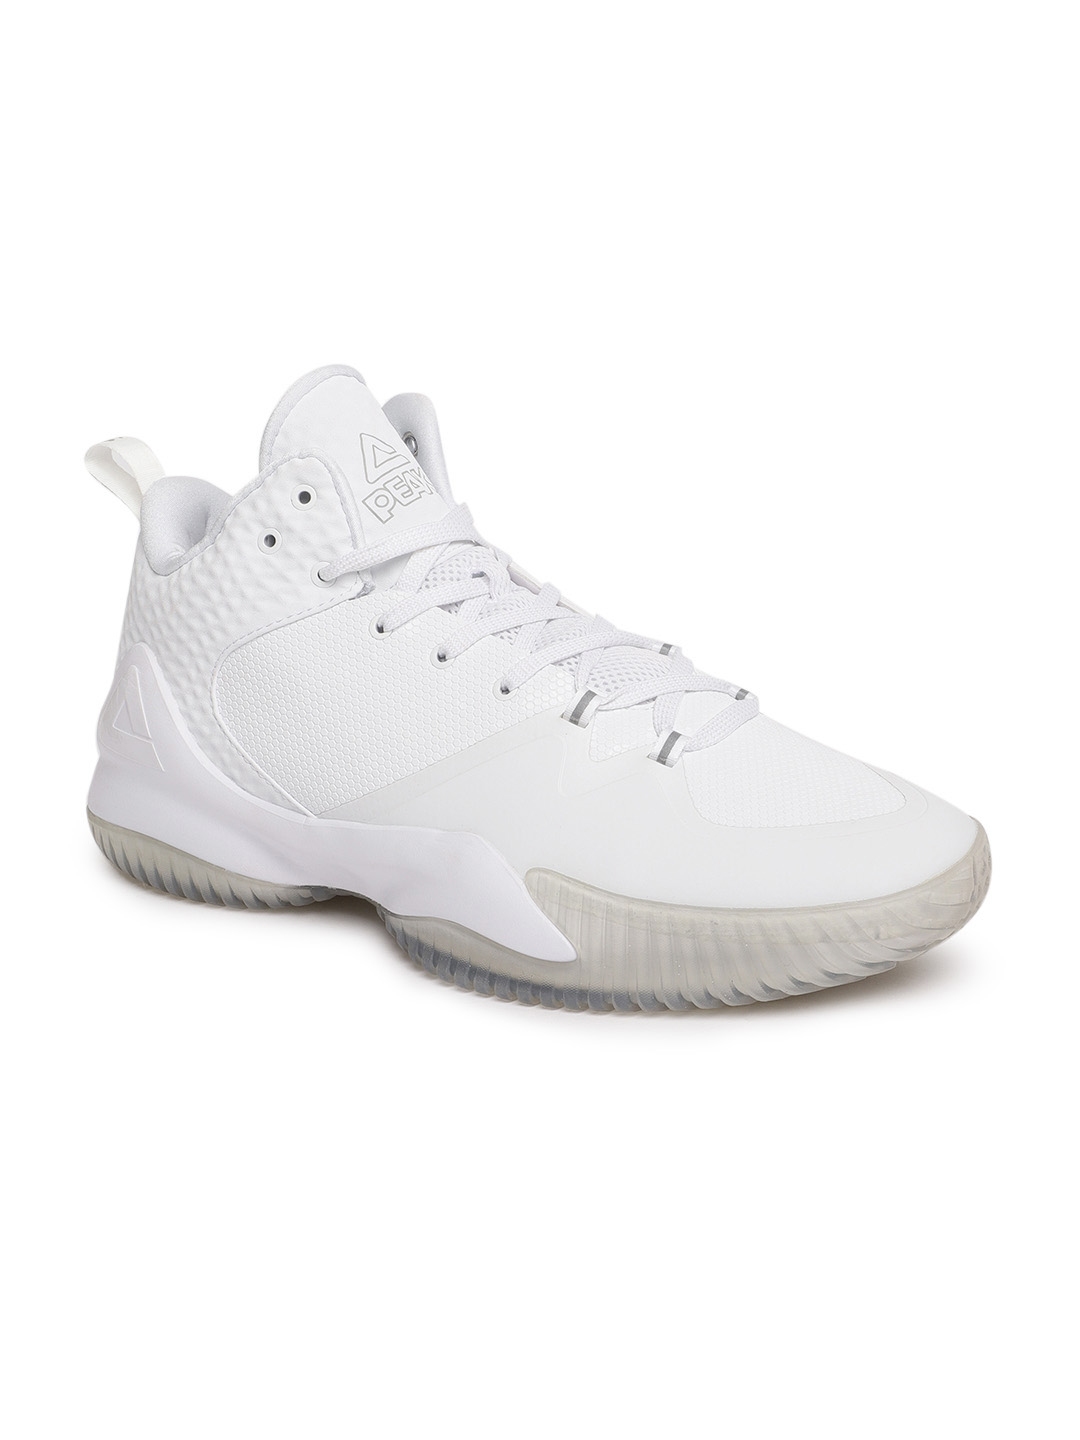 Buy PEAK Men White Basketball Shoes - Sports Shoes for Men 8130415 | Myntra